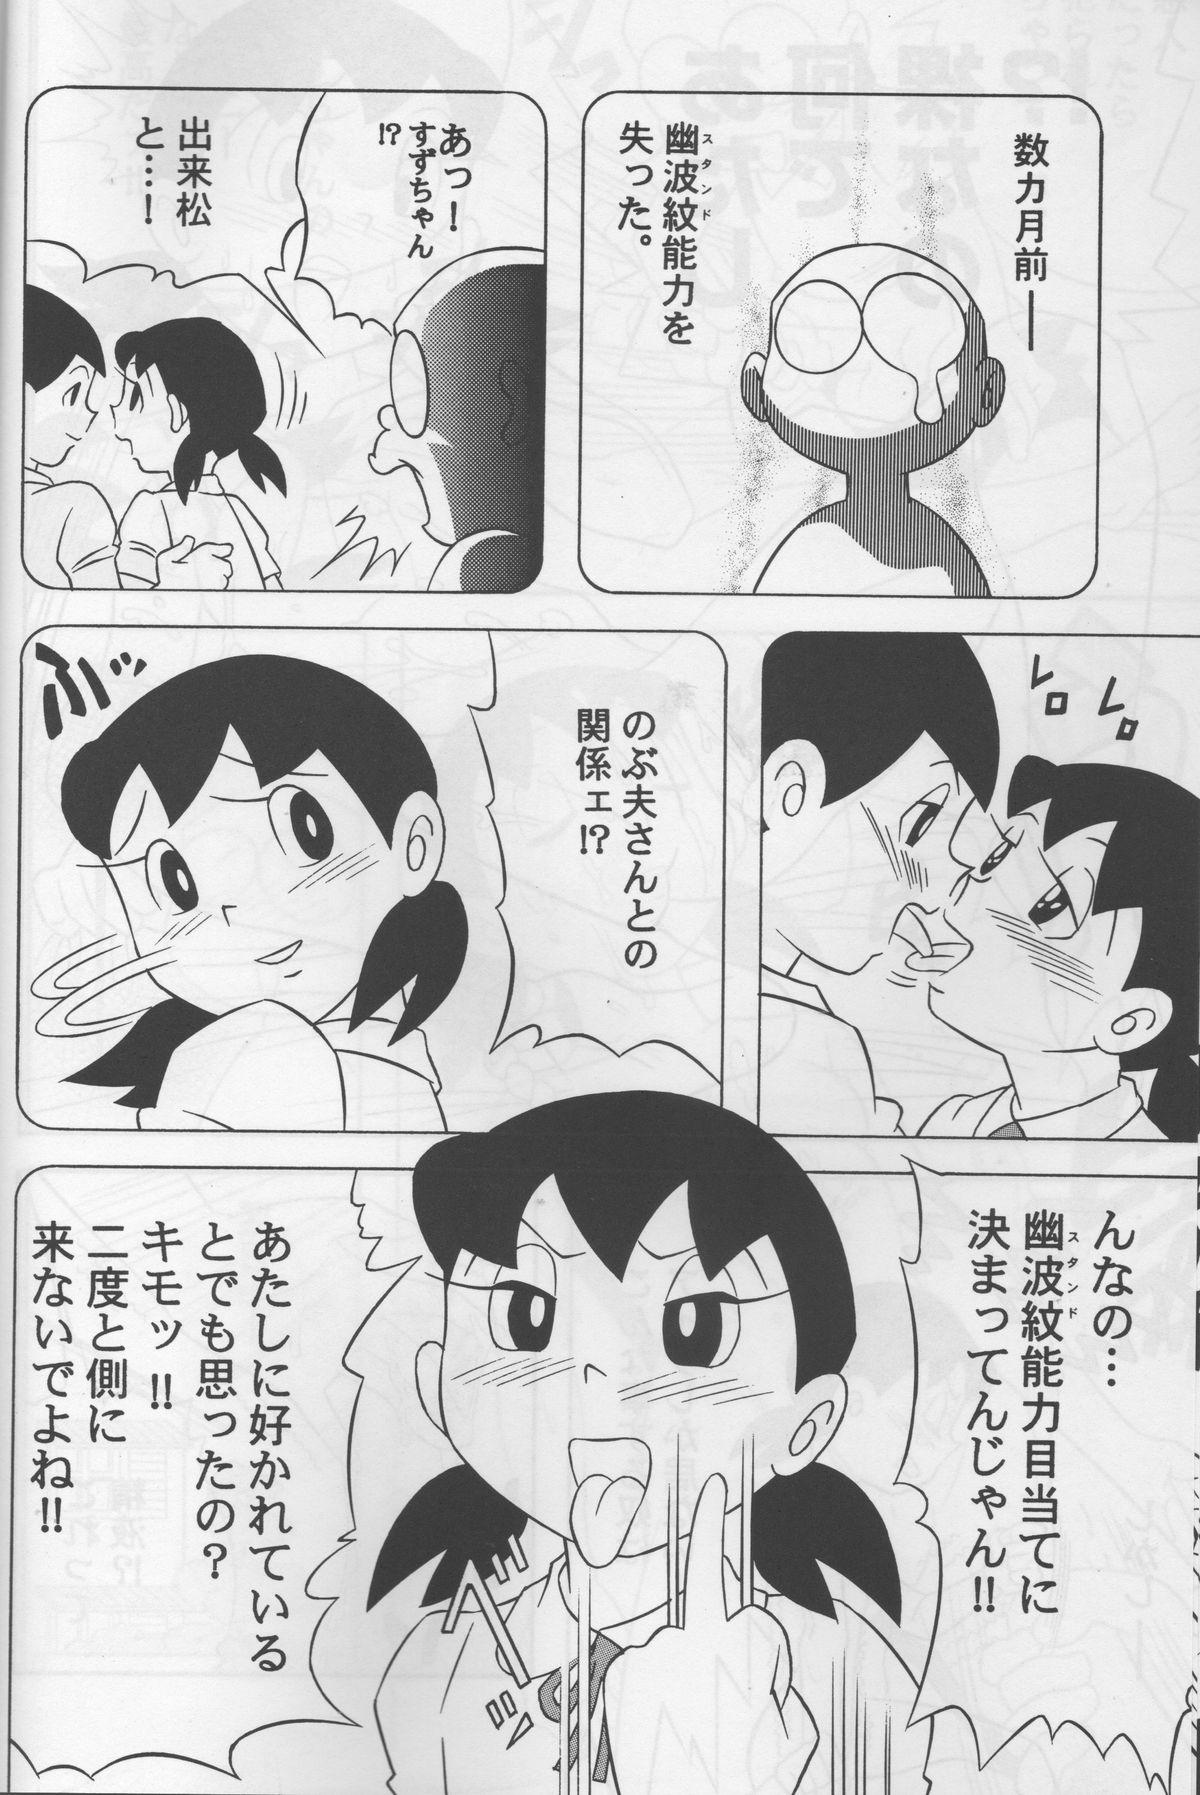 Ball Busting Modokashii Sekai no Uede - Doraemon Bj - Page 7